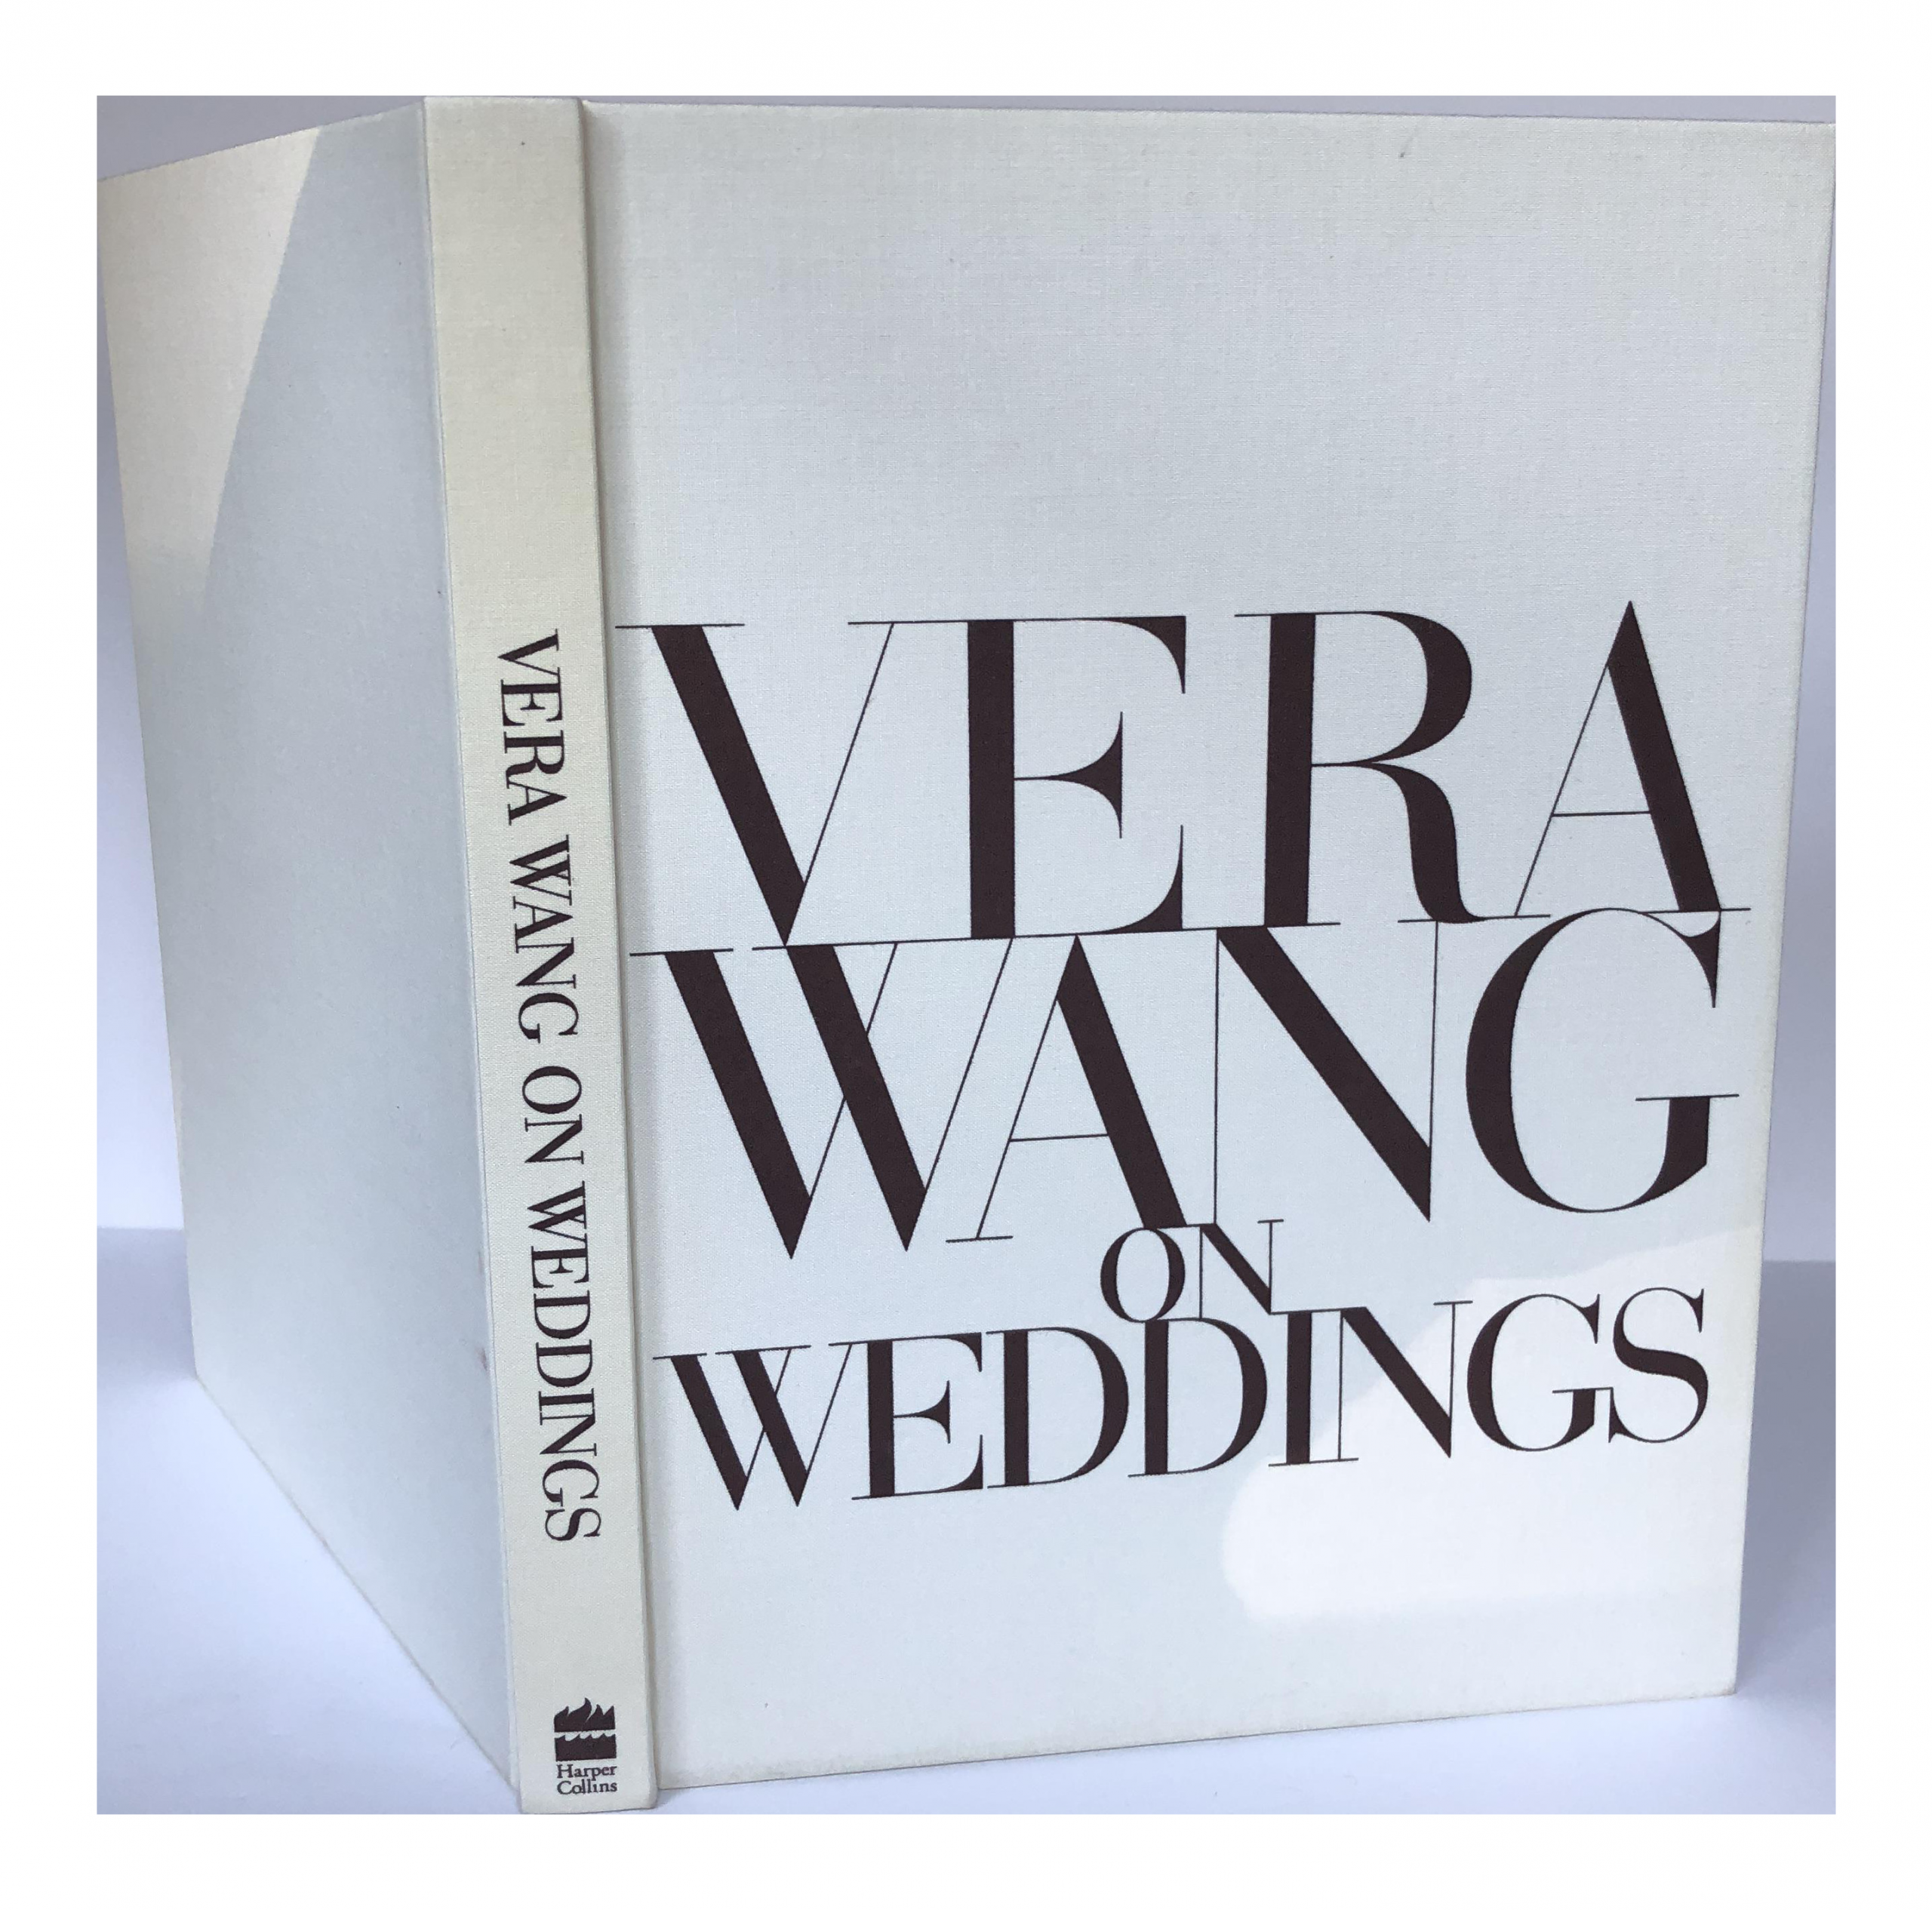 Vera Wang Guest Book For Wedding
 Vera Wang Weddings Coffee Table Book